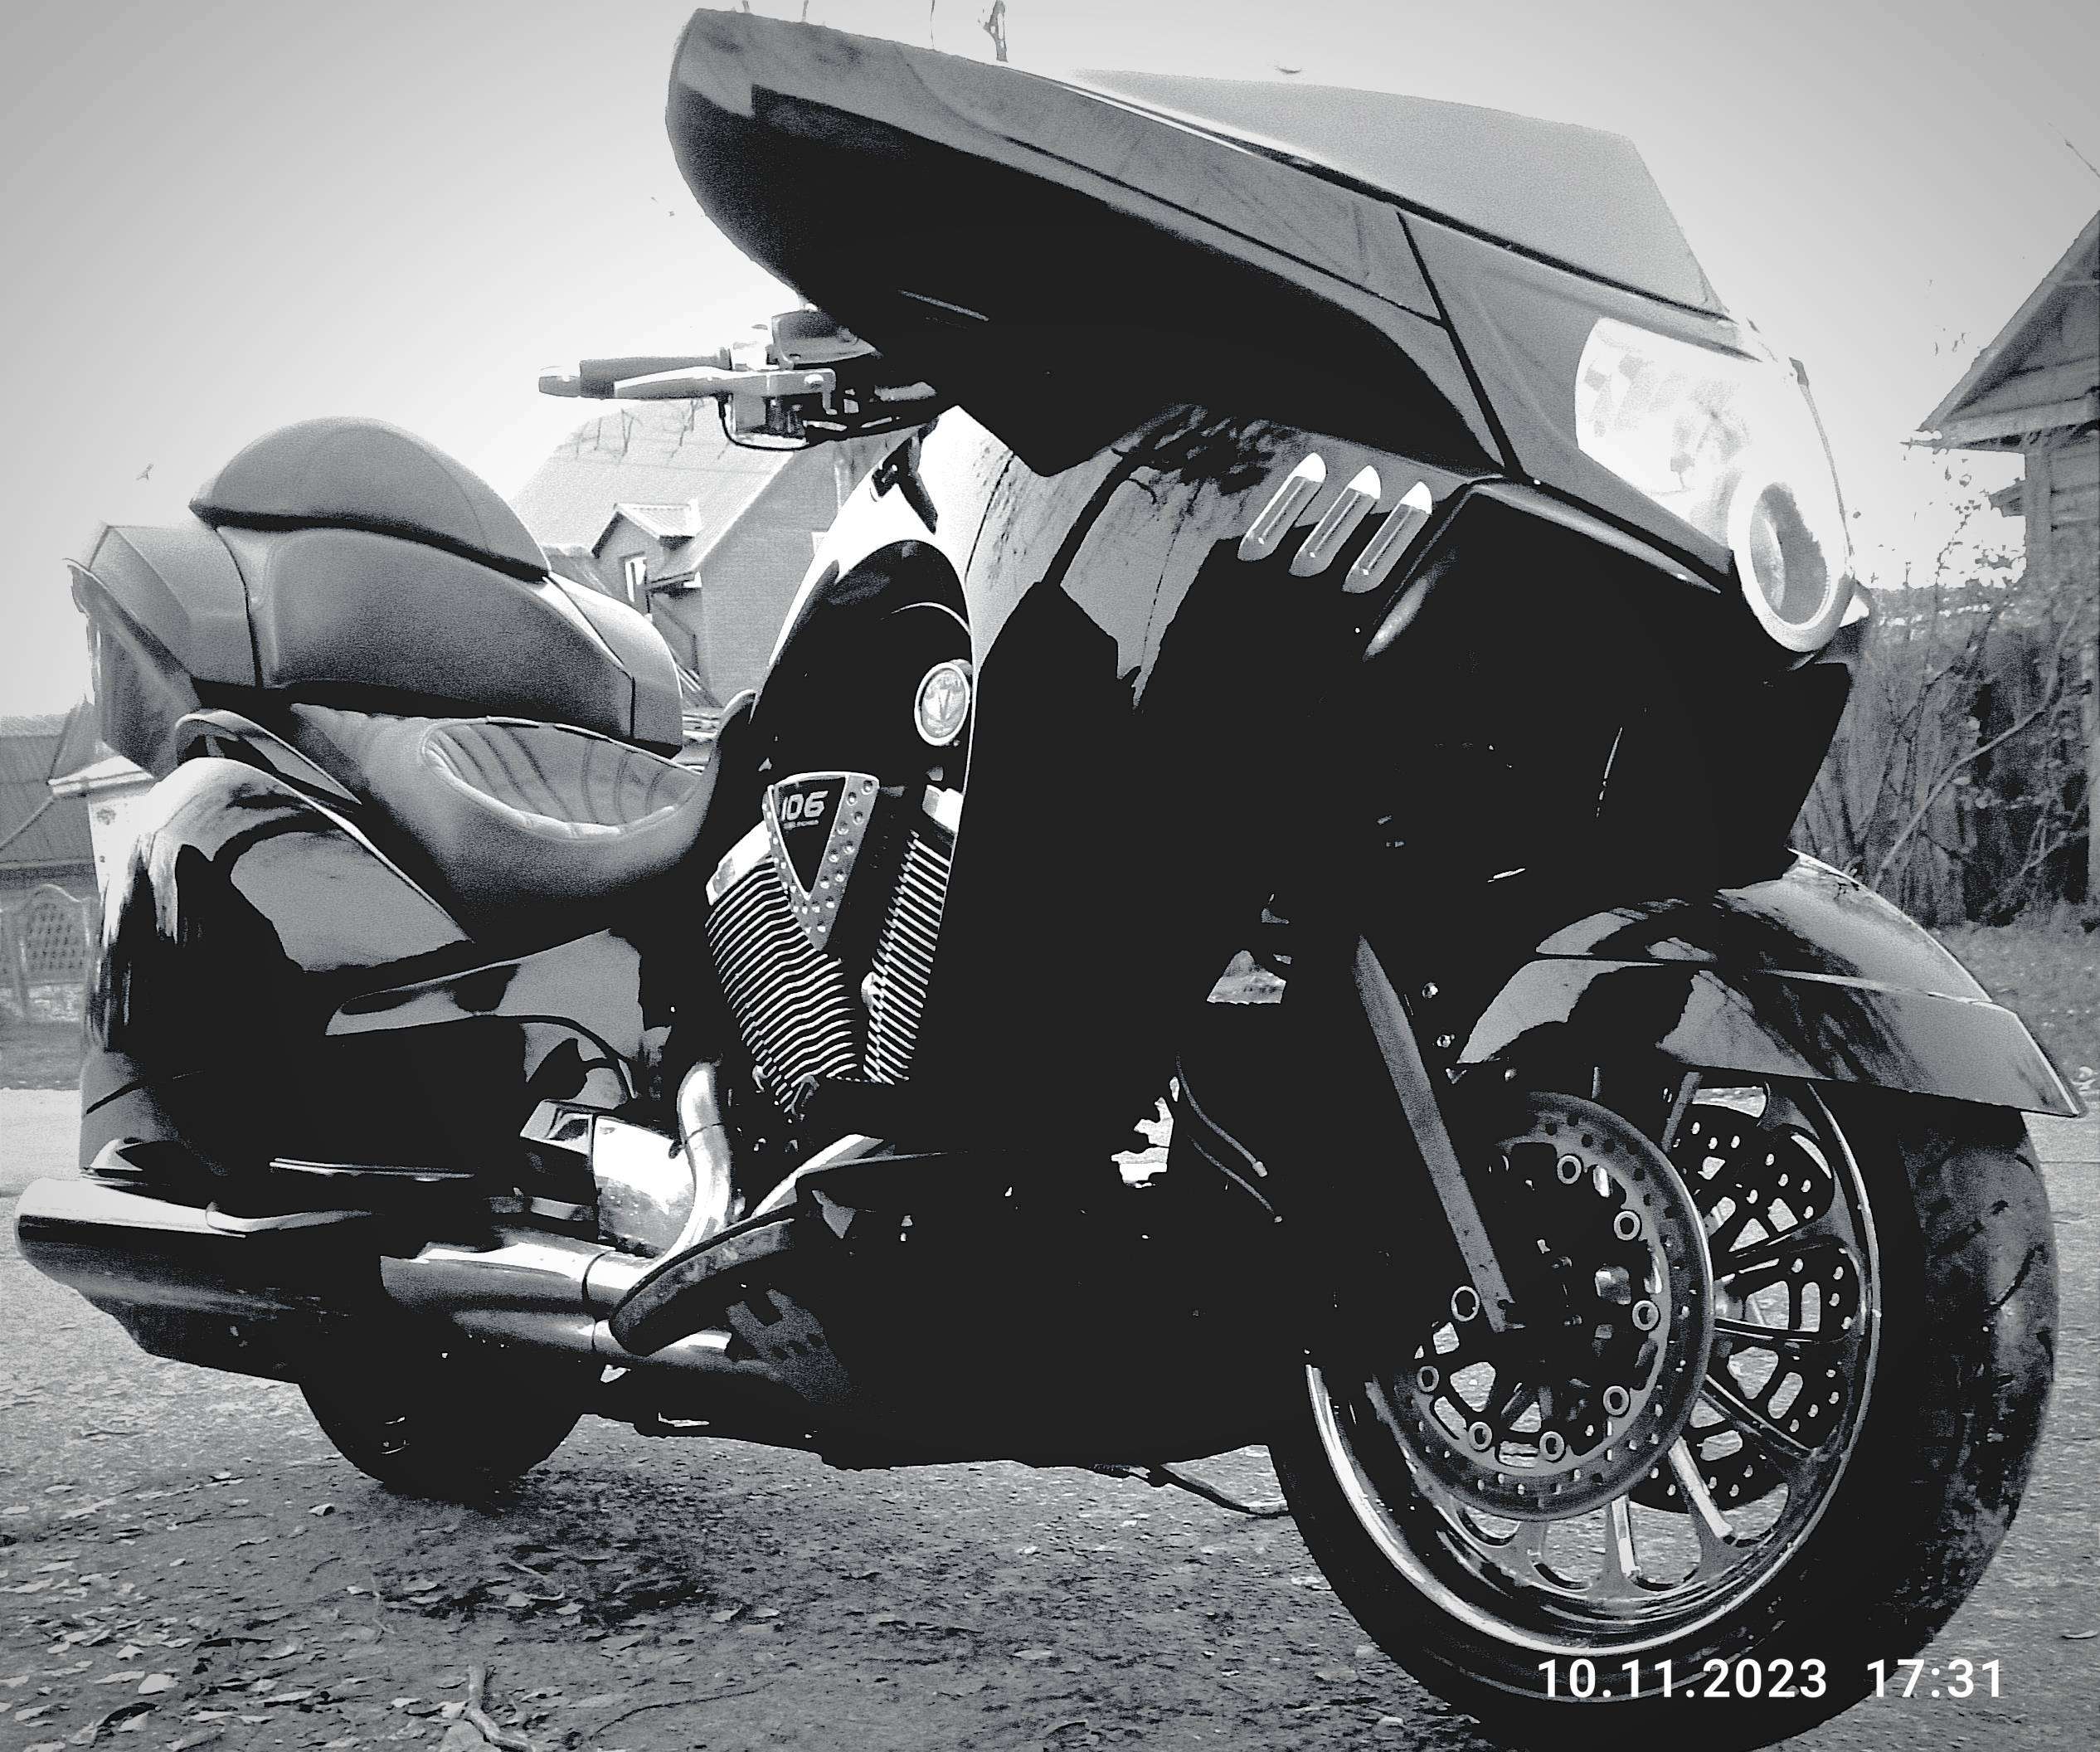 Купить мотоцикл Victory в Беларуси в кредит - цены, характеристики, фото. 